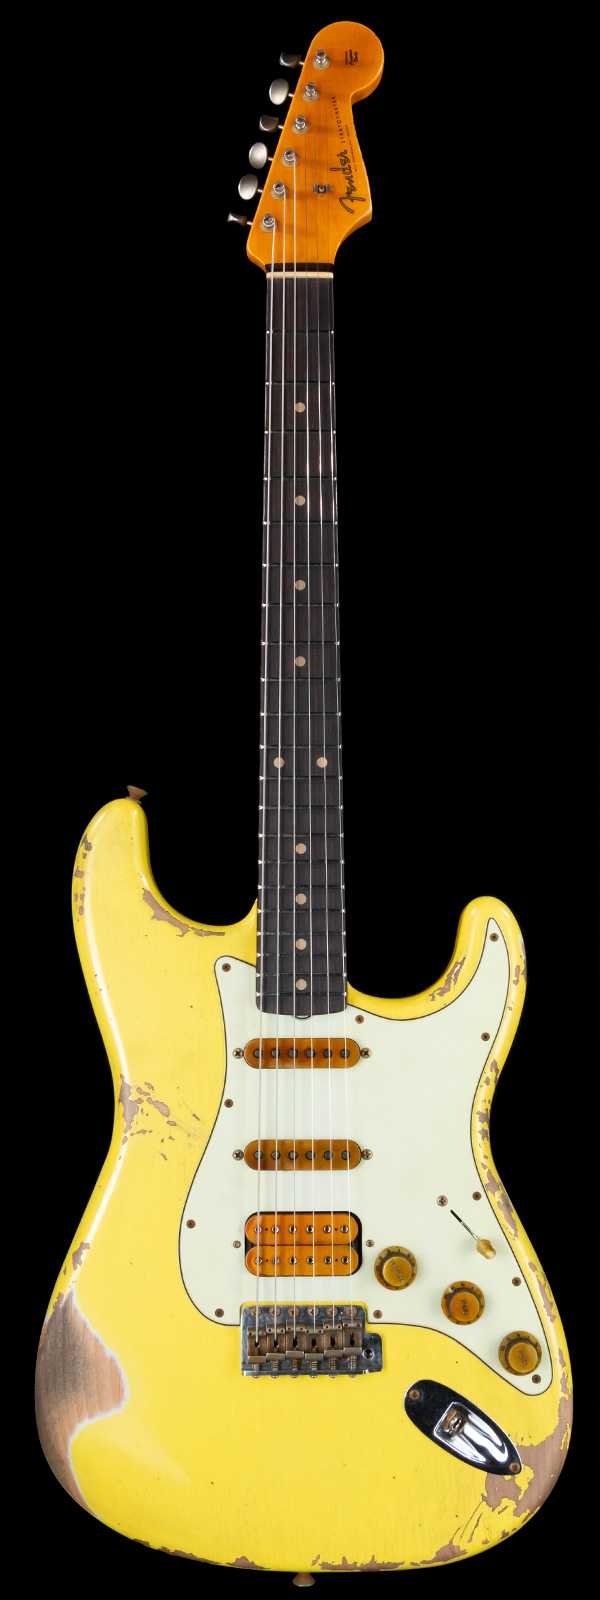 Fender Custom Shop Alley Cat Stratocaster 2.0 Heavy Relic HSS Vintage Trem Rosewood Board Graffiti Yellow